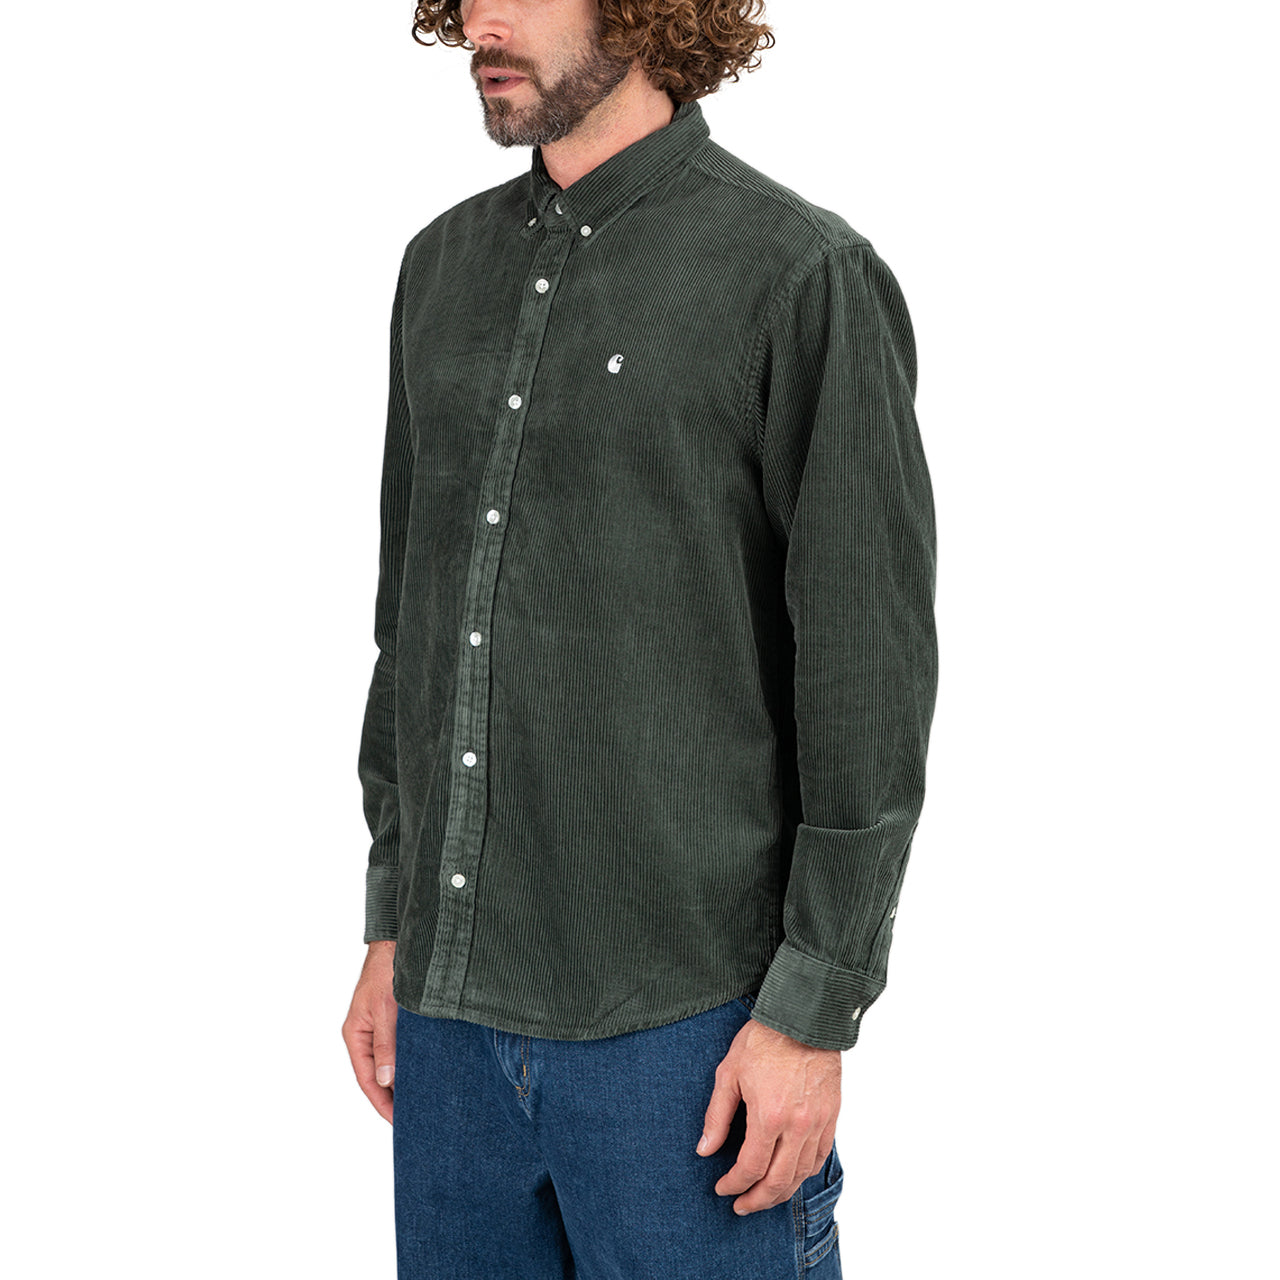 Carhartt WIP Madison Longsleeve Cord Shirt (Grau / Grün)  - Allike Store